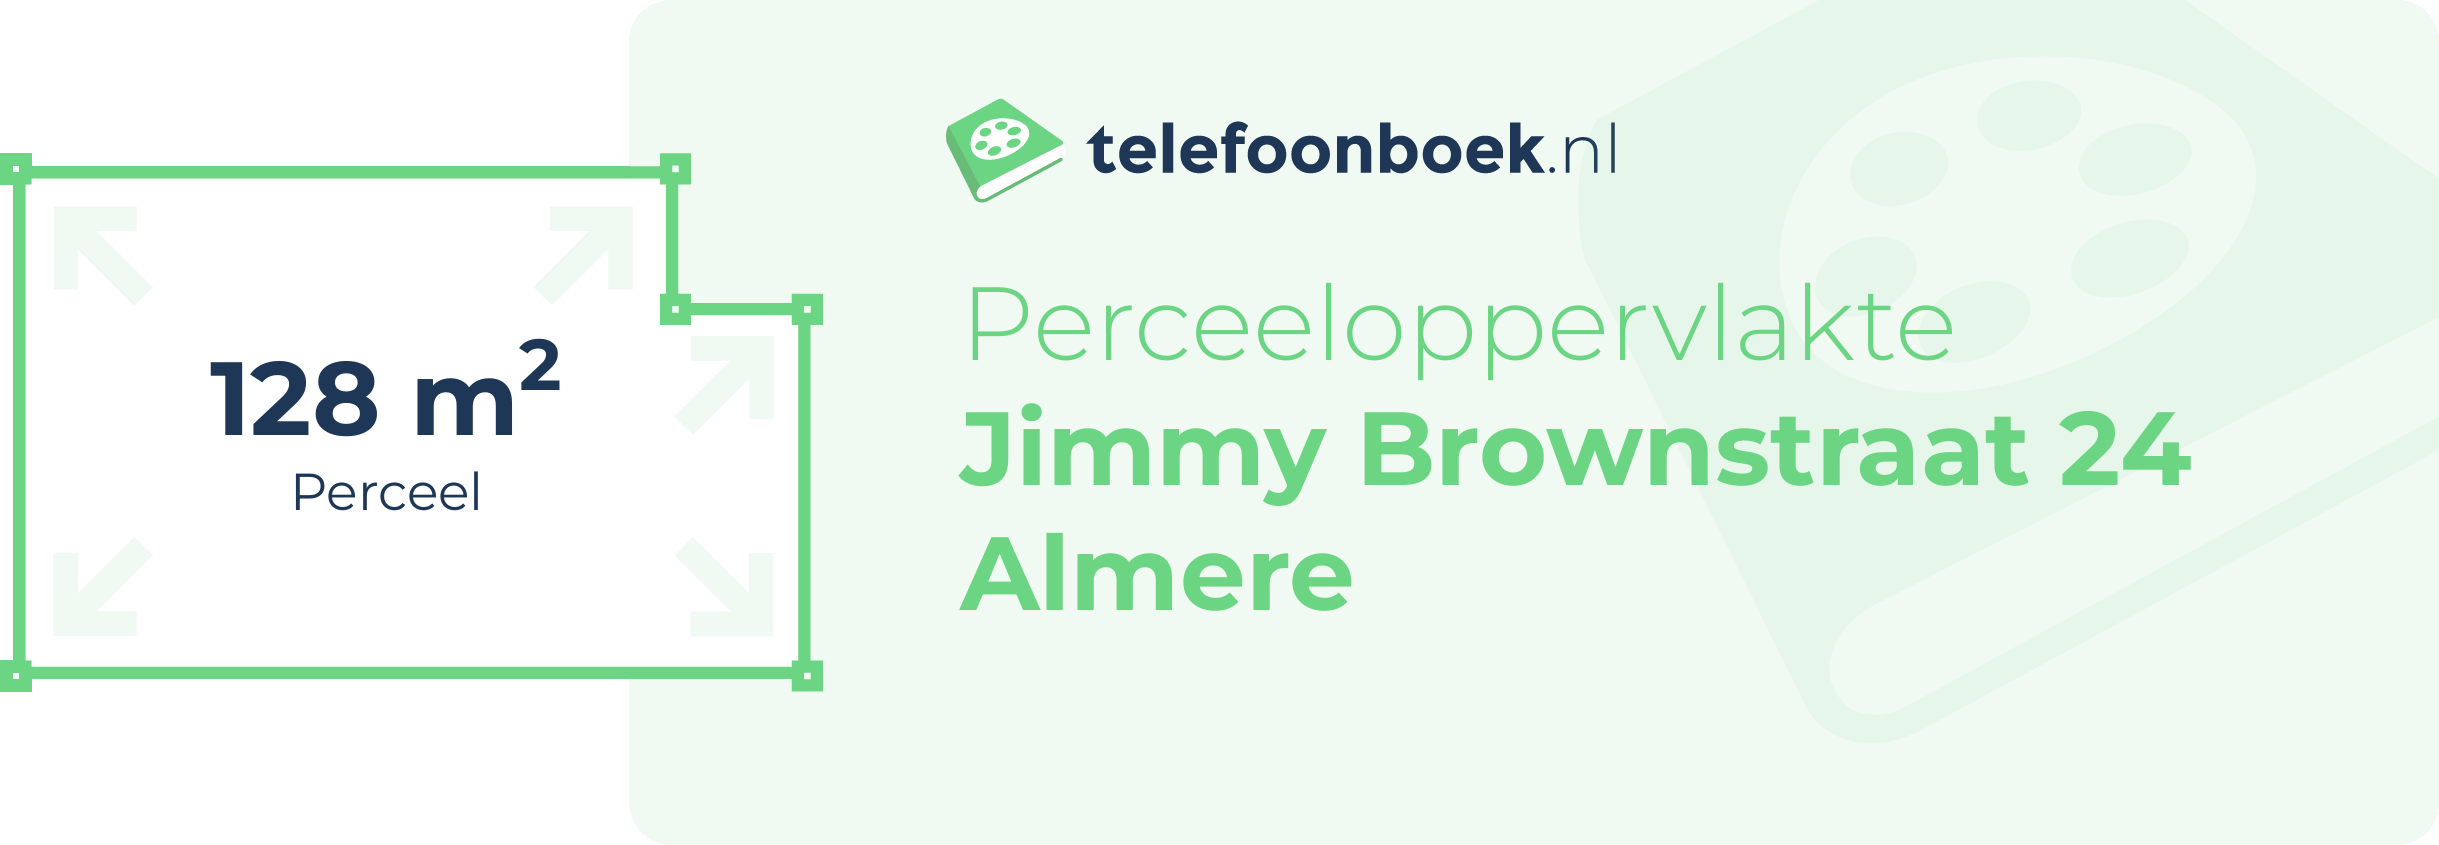 Perceeloppervlakte Jimmy Brownstraat 24 Almere